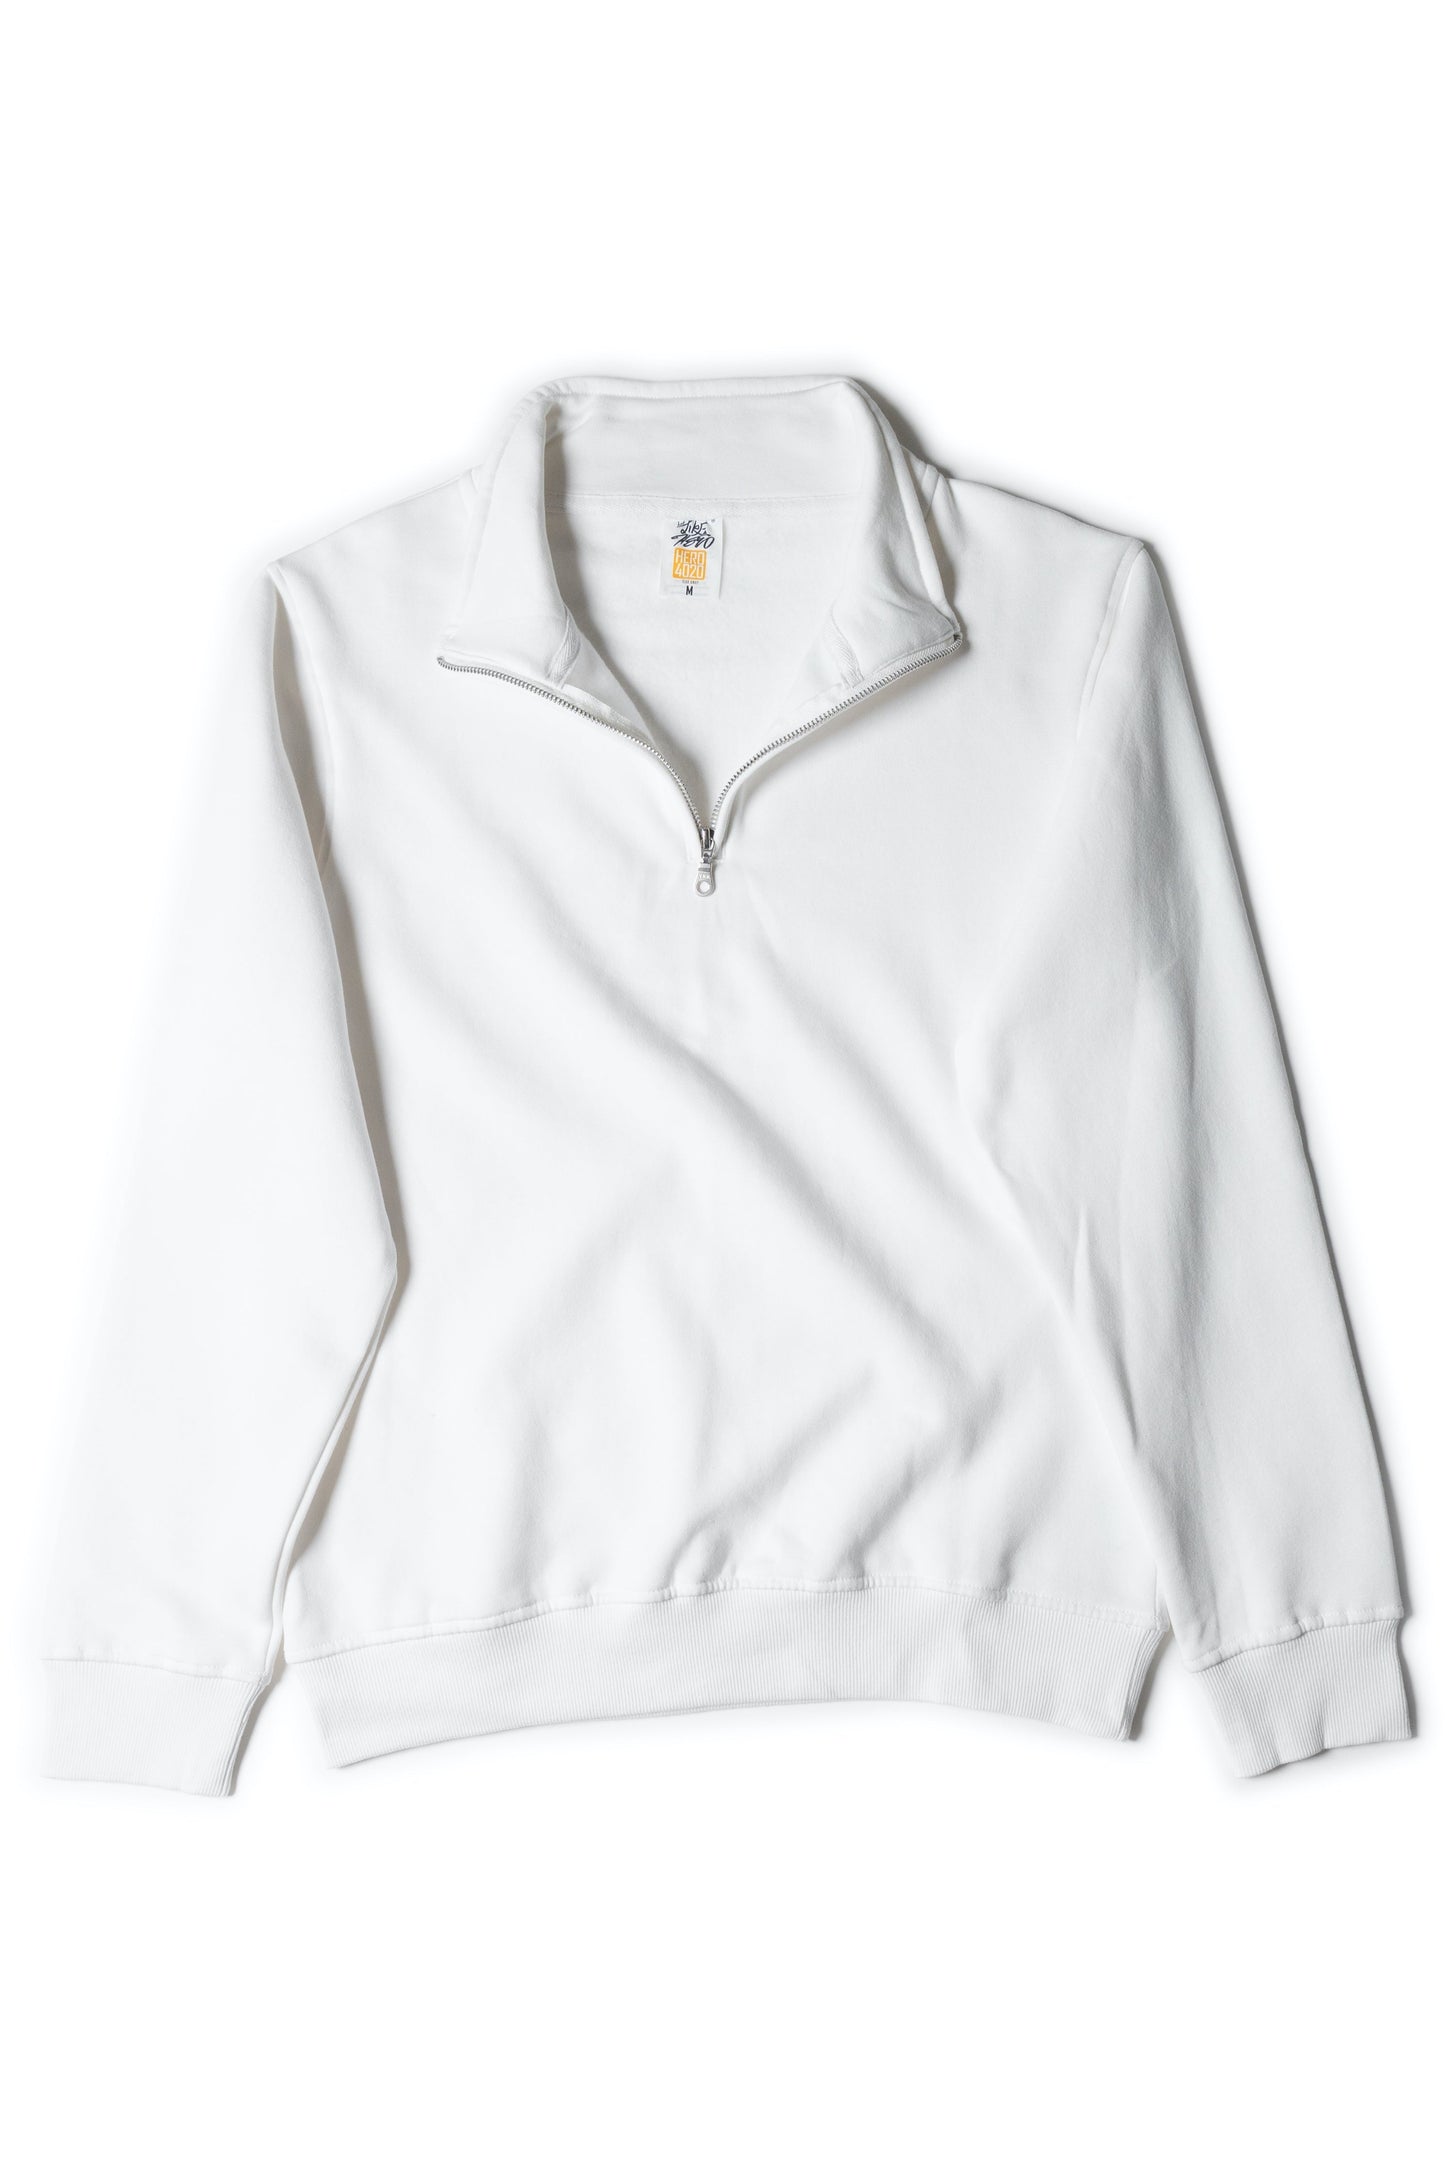 HERO-4020 Unisex Quarter Zip Sweatshirt - White Quarter-Zip